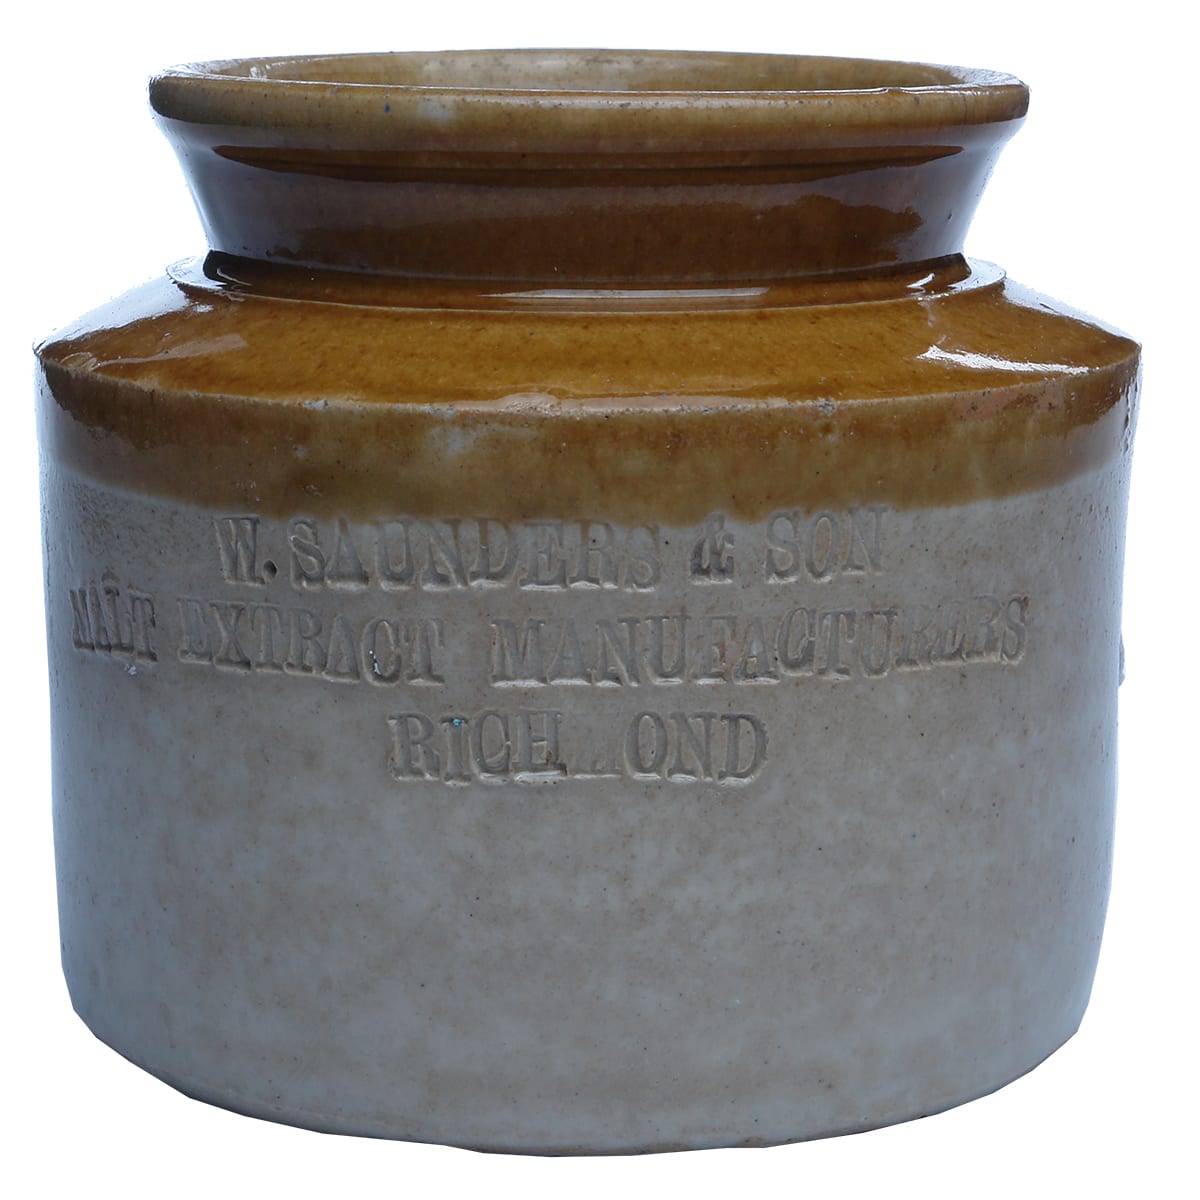 Jar. W. Saunders & Son, Richmond. Malt Extract. Tan Top. 5 Pounds.